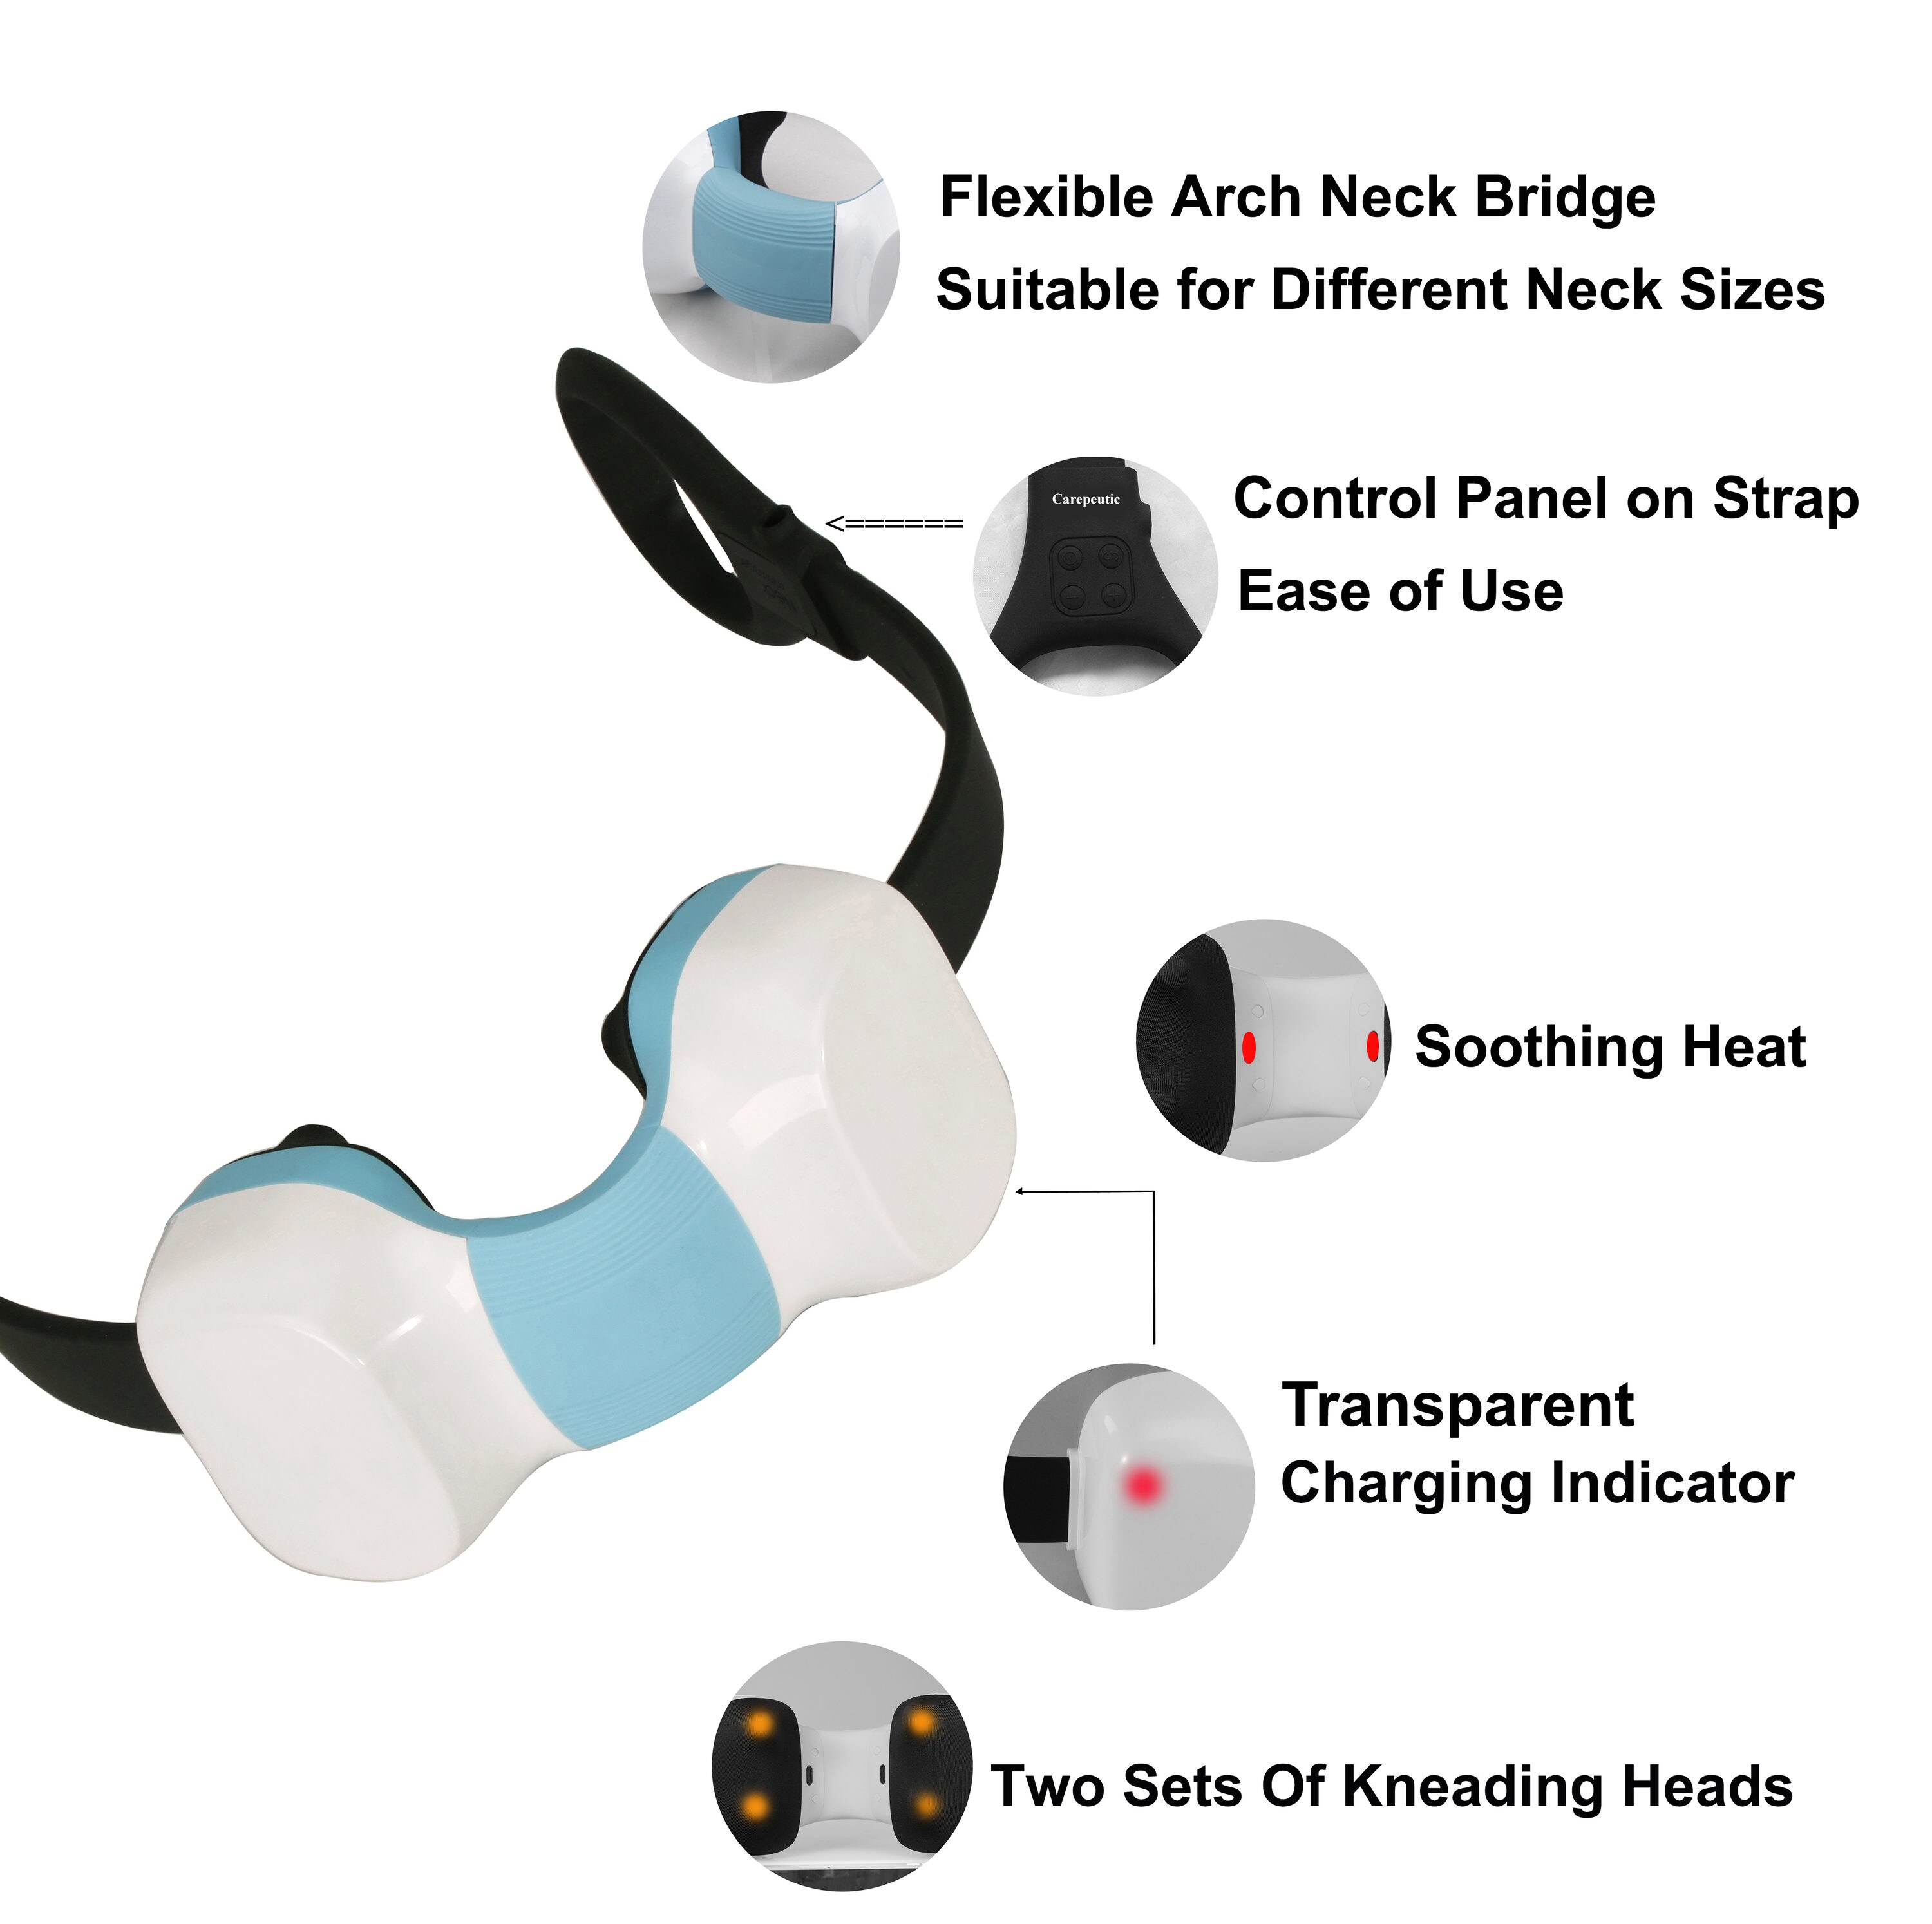 Osaki AmaMedic Neck Tens Massager - Handheld Plug-in Neck Massager